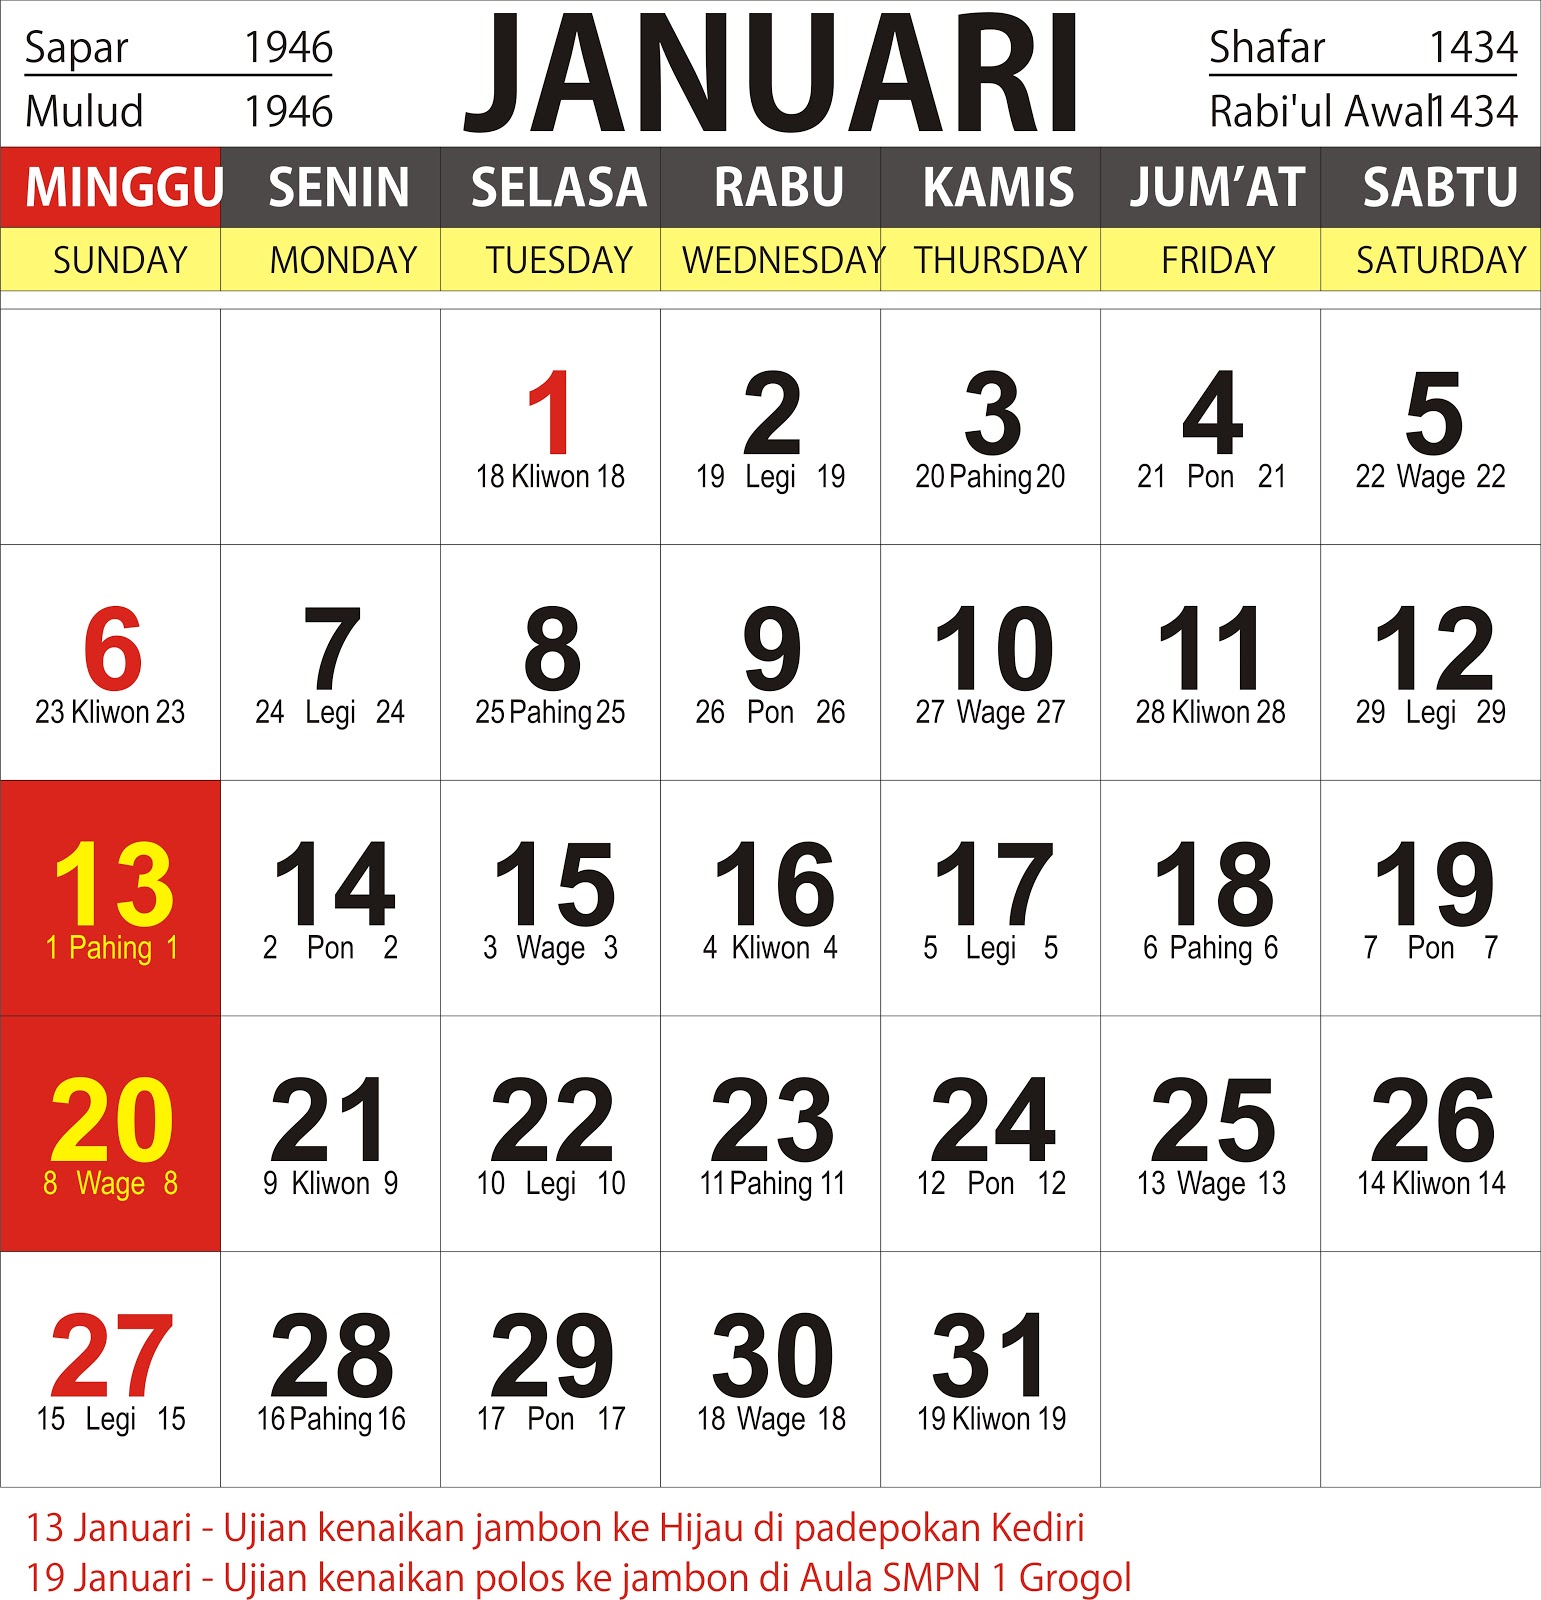 Sigropashter: Kalender Kegiatan Januari 2013